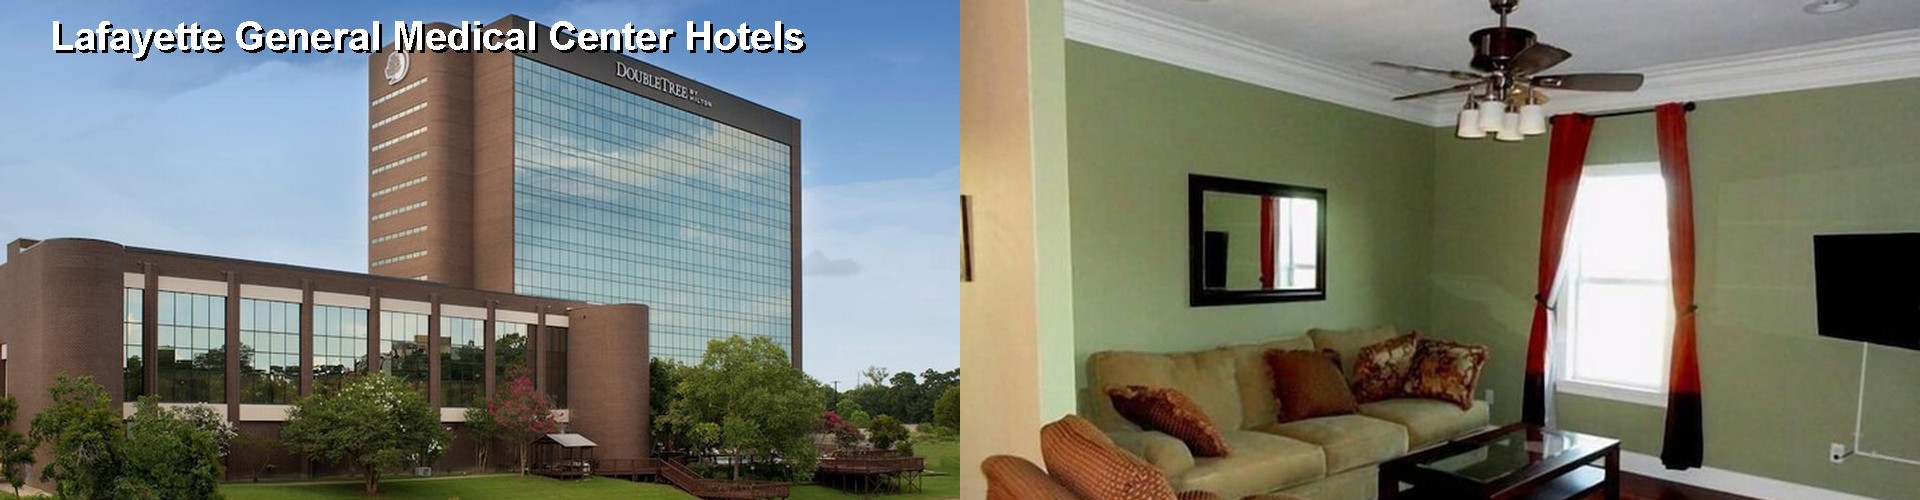 5 Best Hotels near Lafayette General Medical Center